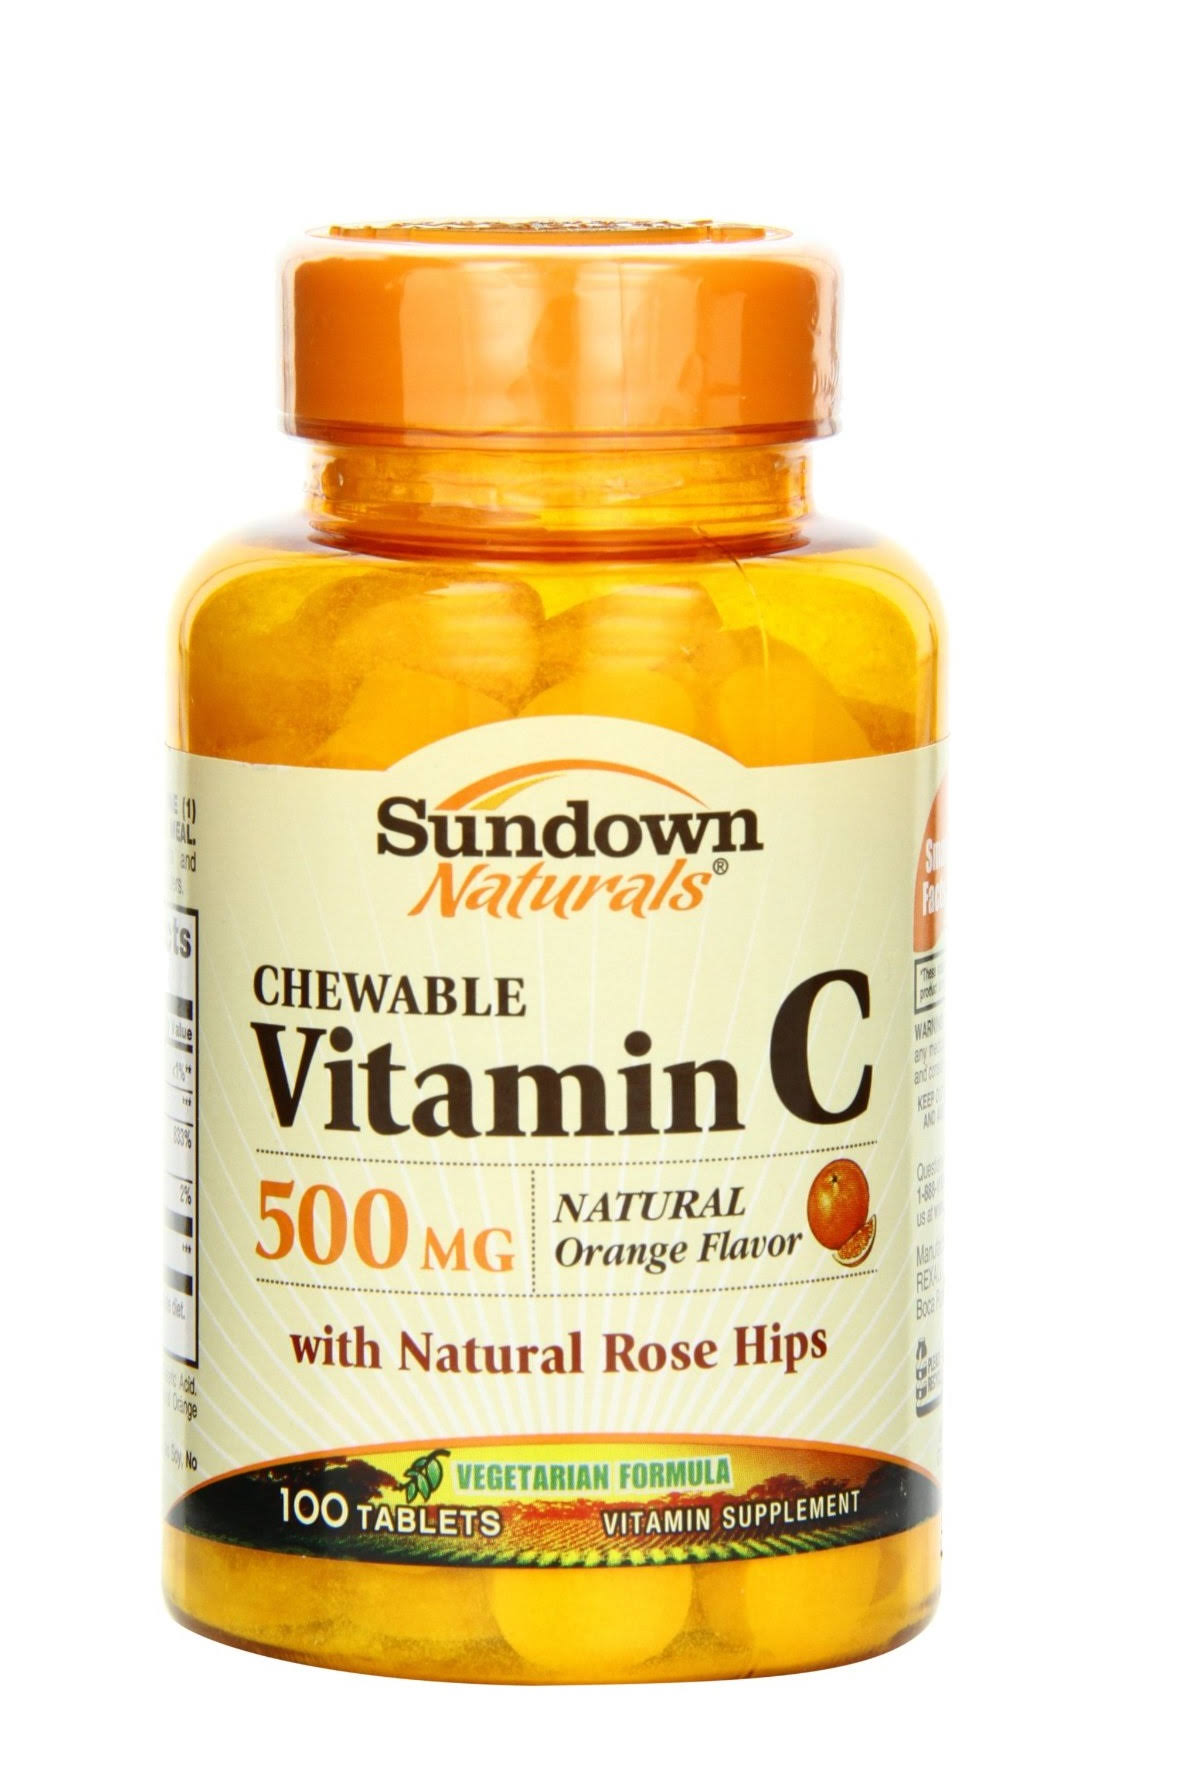 Sundown Naturals Chewable Vitamin C Supplement - Orange, 500mg, 100ct